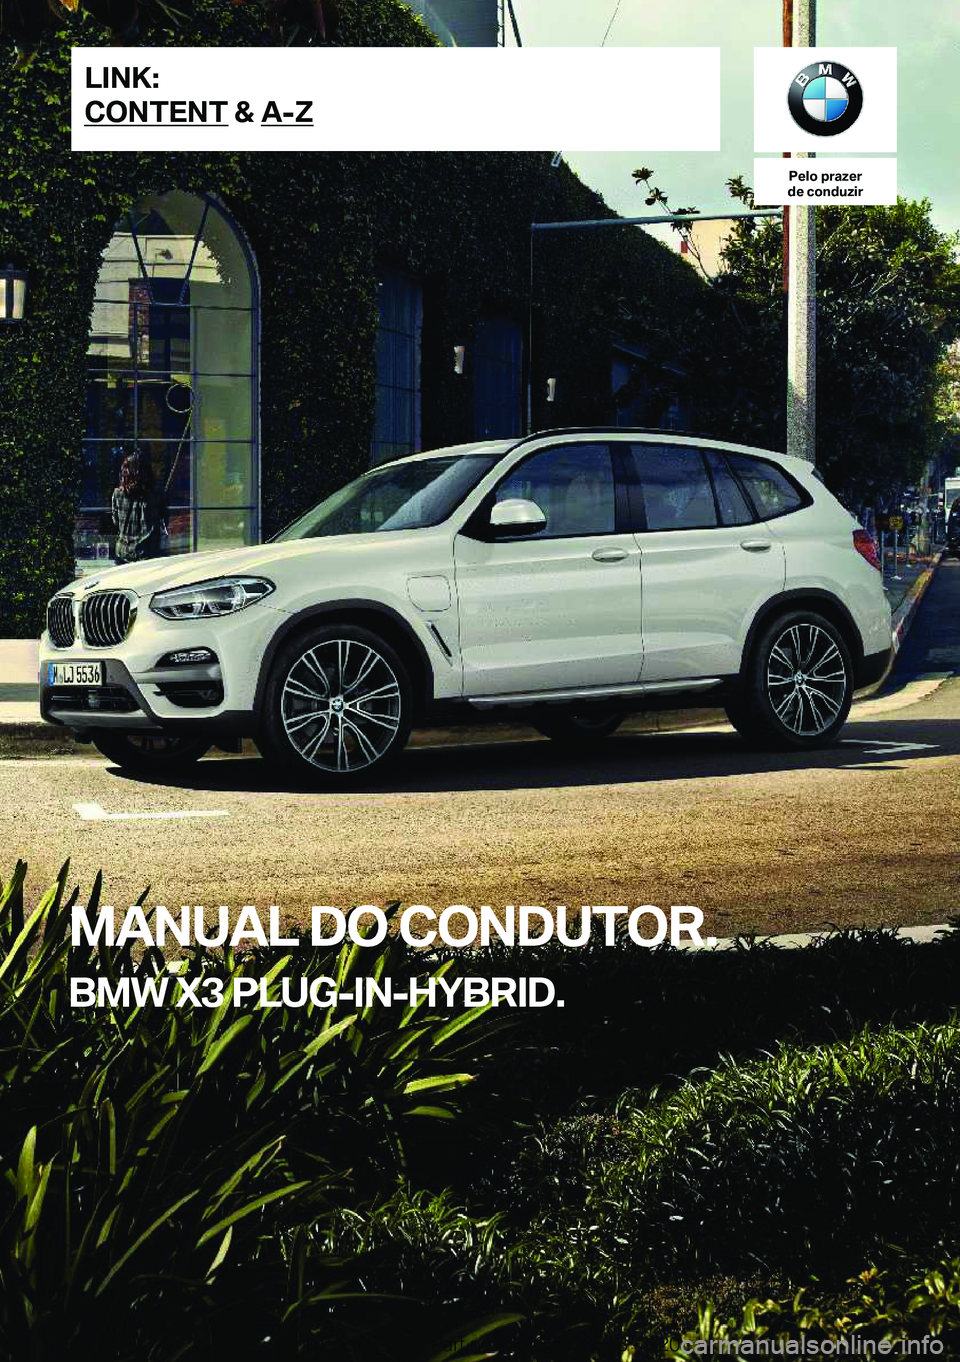 BMW X3 PLUG IN HYBRID 2020  Manual do condutor (in Portuguese) �P�e�l�o��p�r�a�z�e�r
�d�e��c�o�n�d�u�z�i�r
�M�A�N�U�A�L��D�O��C�O�N�D�U�T�O�R�.
�B�M�W��X�3��P�L�U�G�-�I�N�-�H�Y�B�R�I�D�.�L�I�N�K�:
�C�O�N�T�E�N�T��&��A�-�Z�O�n�l�i�n�e��E�d�i�t�i�o�n��f�o